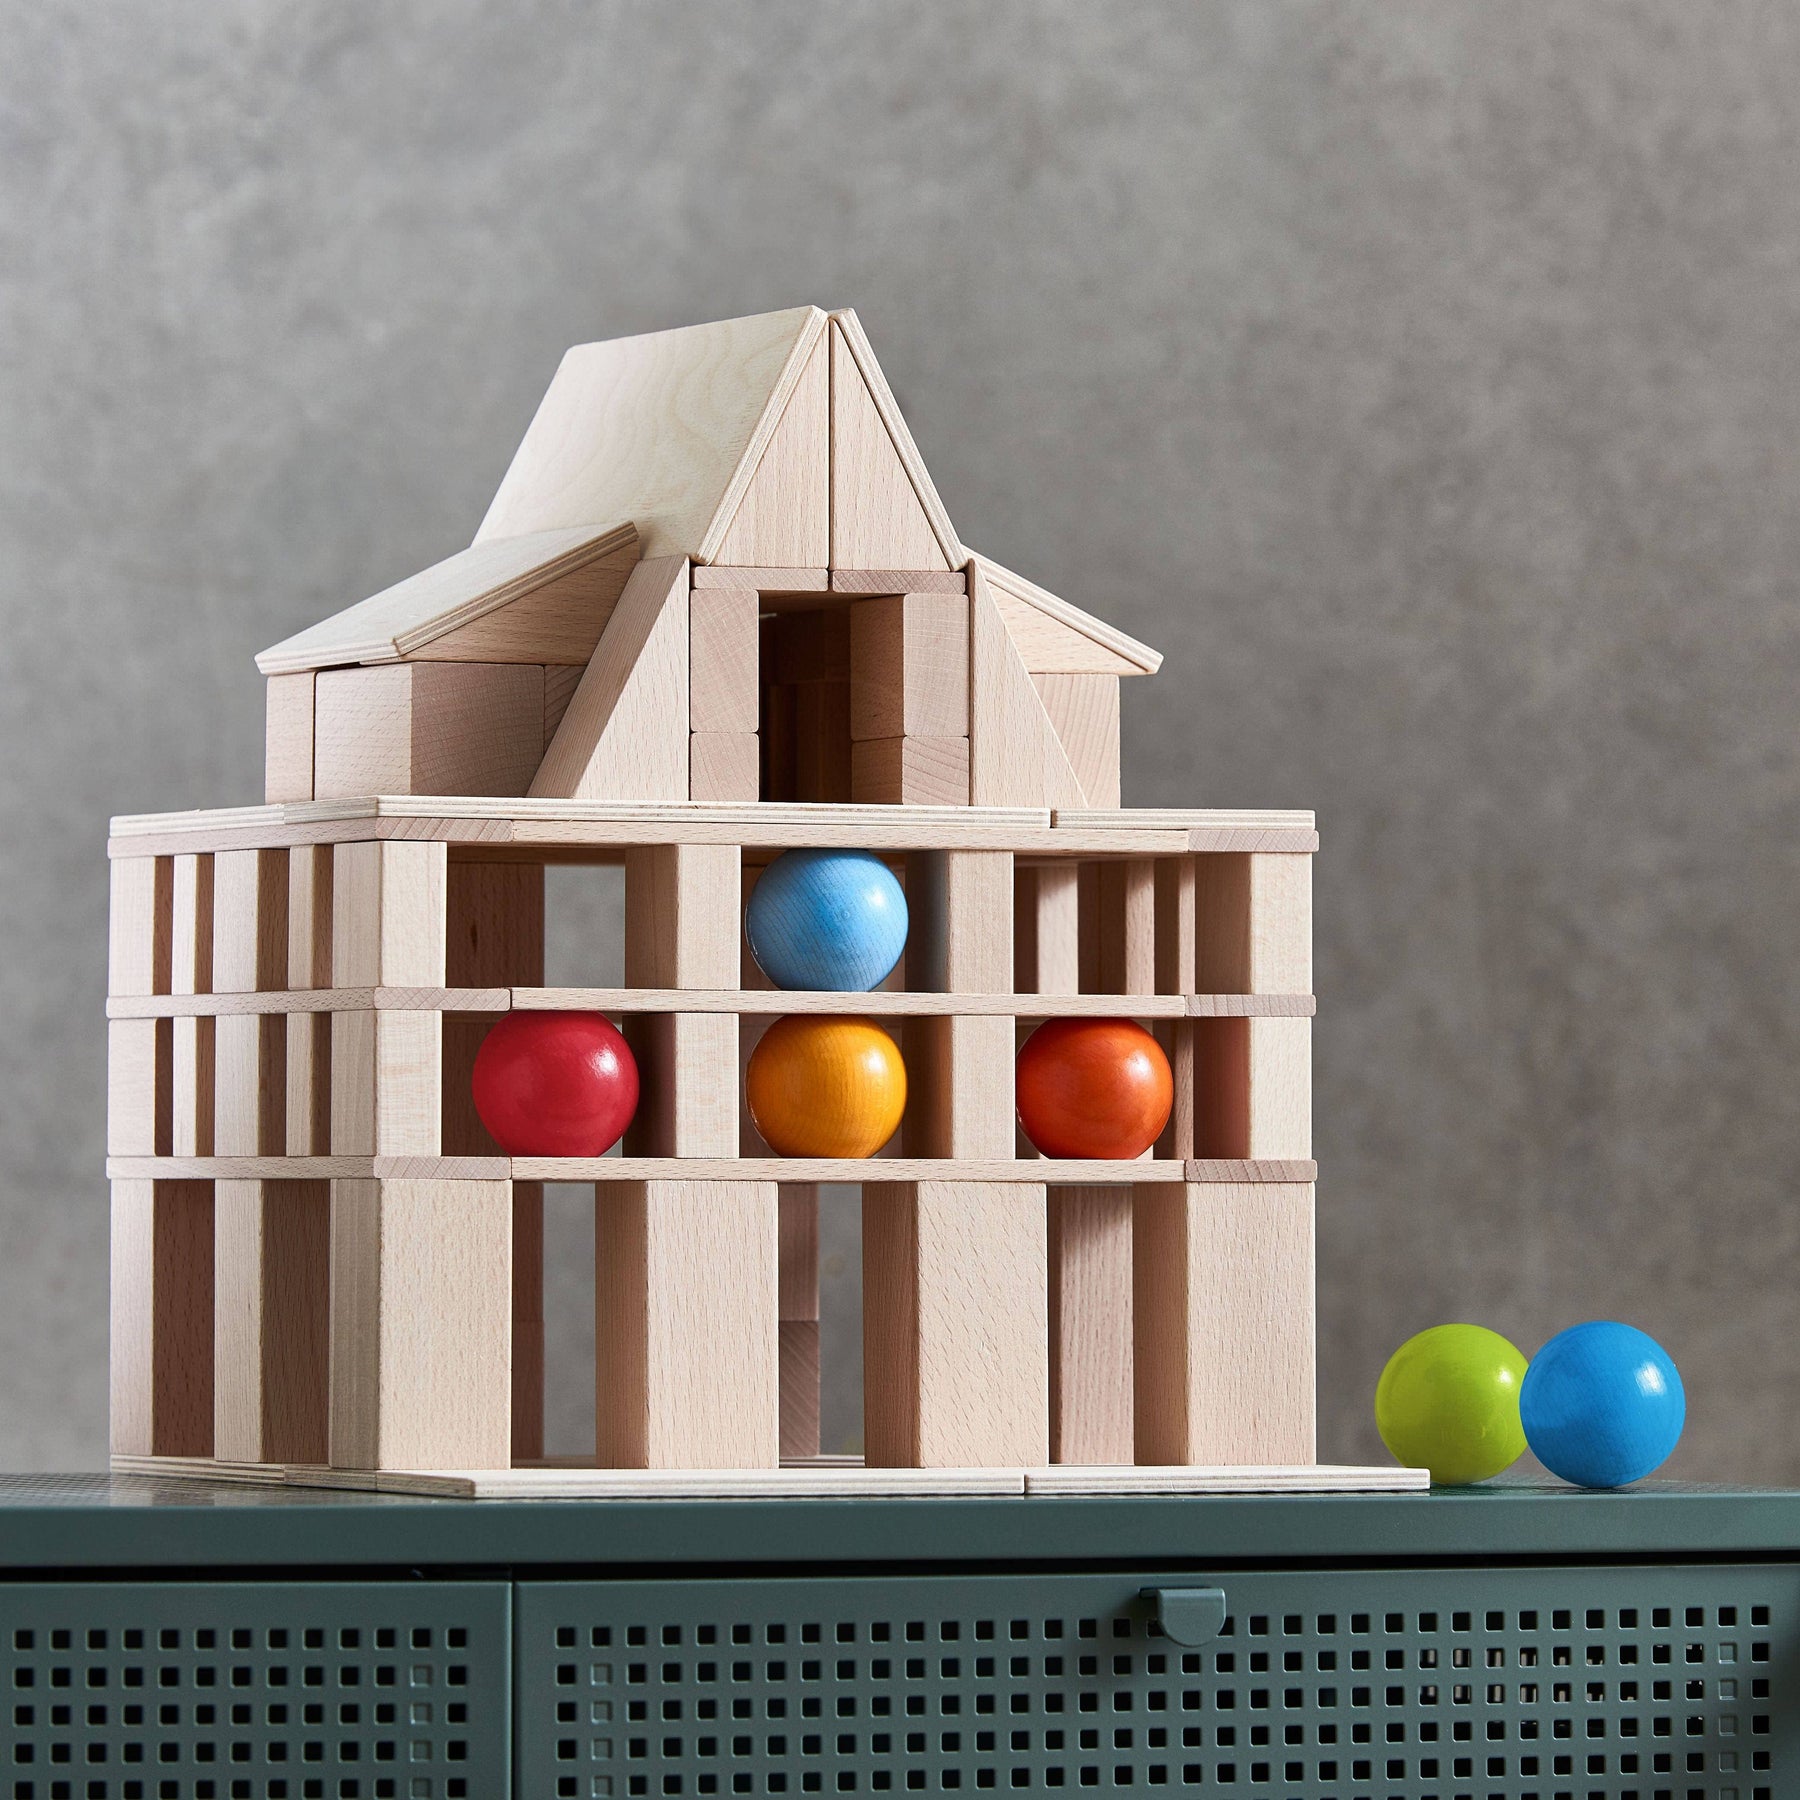 Heiheiup Building Game Building Block Imaginate Kids Structure